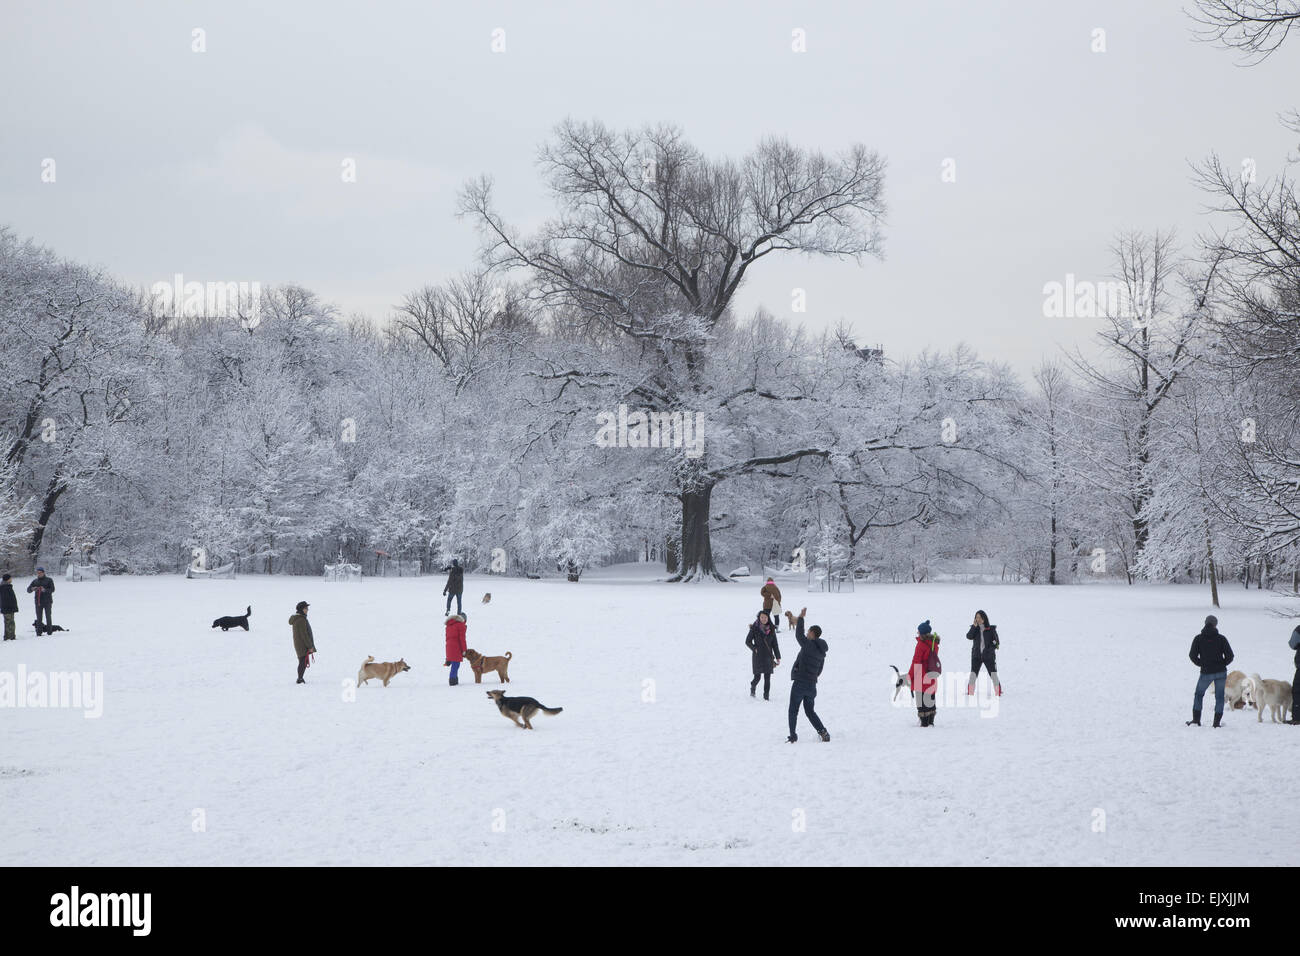 Wintermorgen in Prospect Park vor 09:00 Wenn Hunde frei herumlaufen dürfen.  Brooklyn, NY Stockfotografie - Alamy